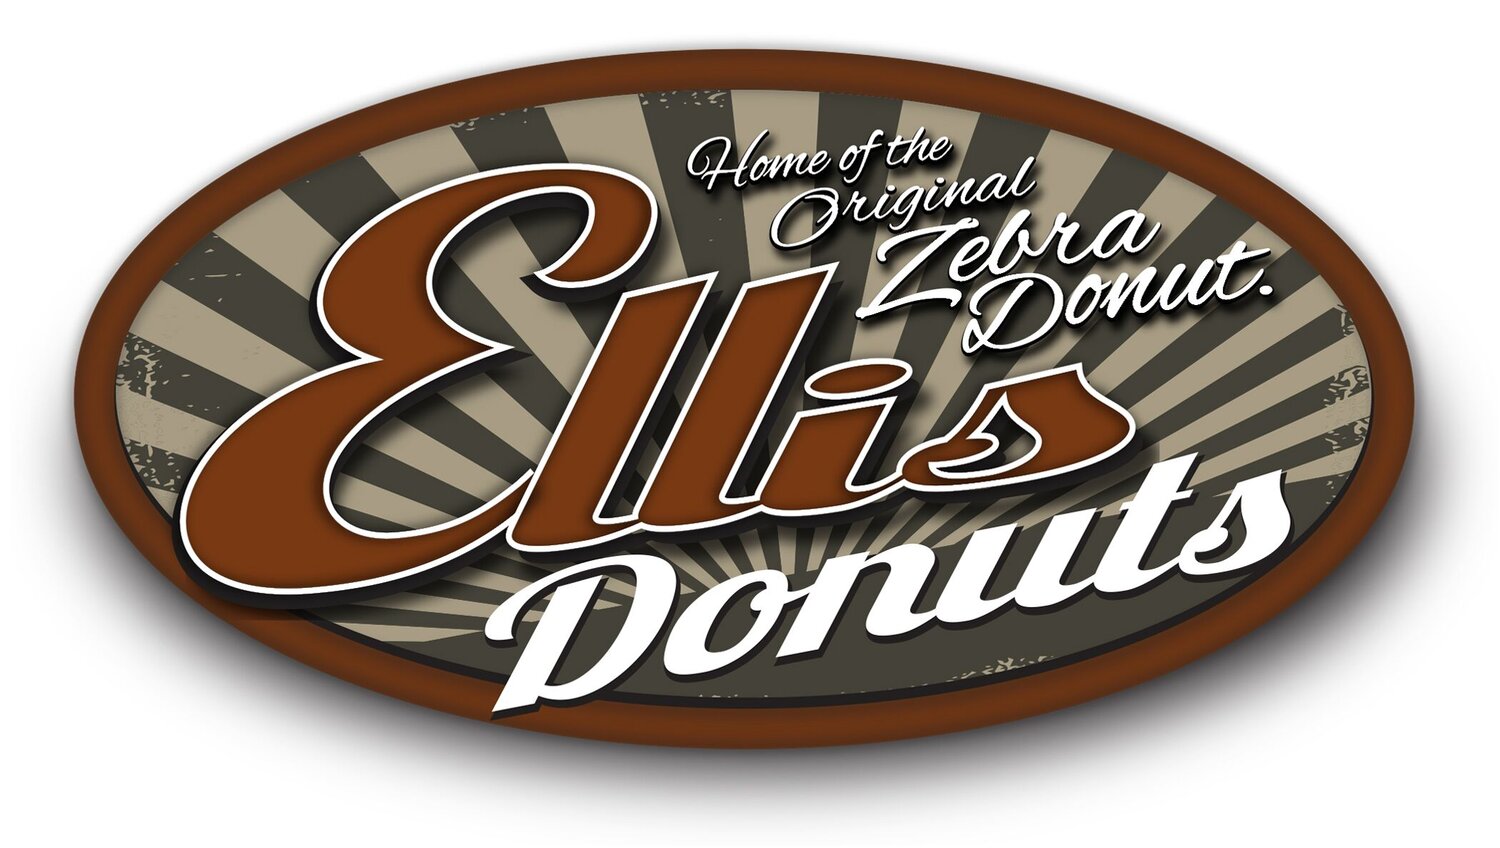 Ellis Donuts